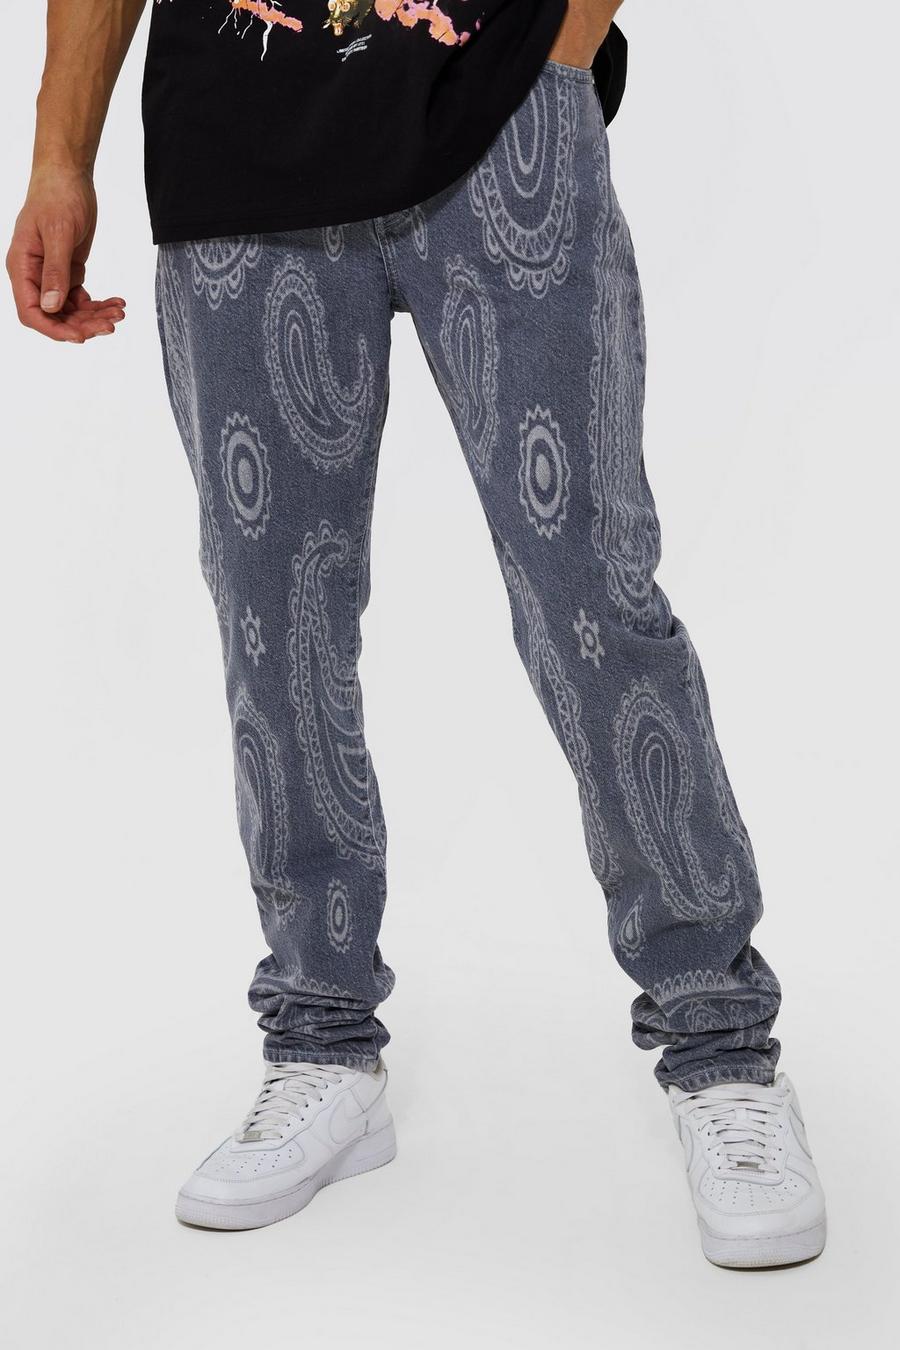 Tall schmale Jeans mit Paisley Laser-Print, Light grey grau